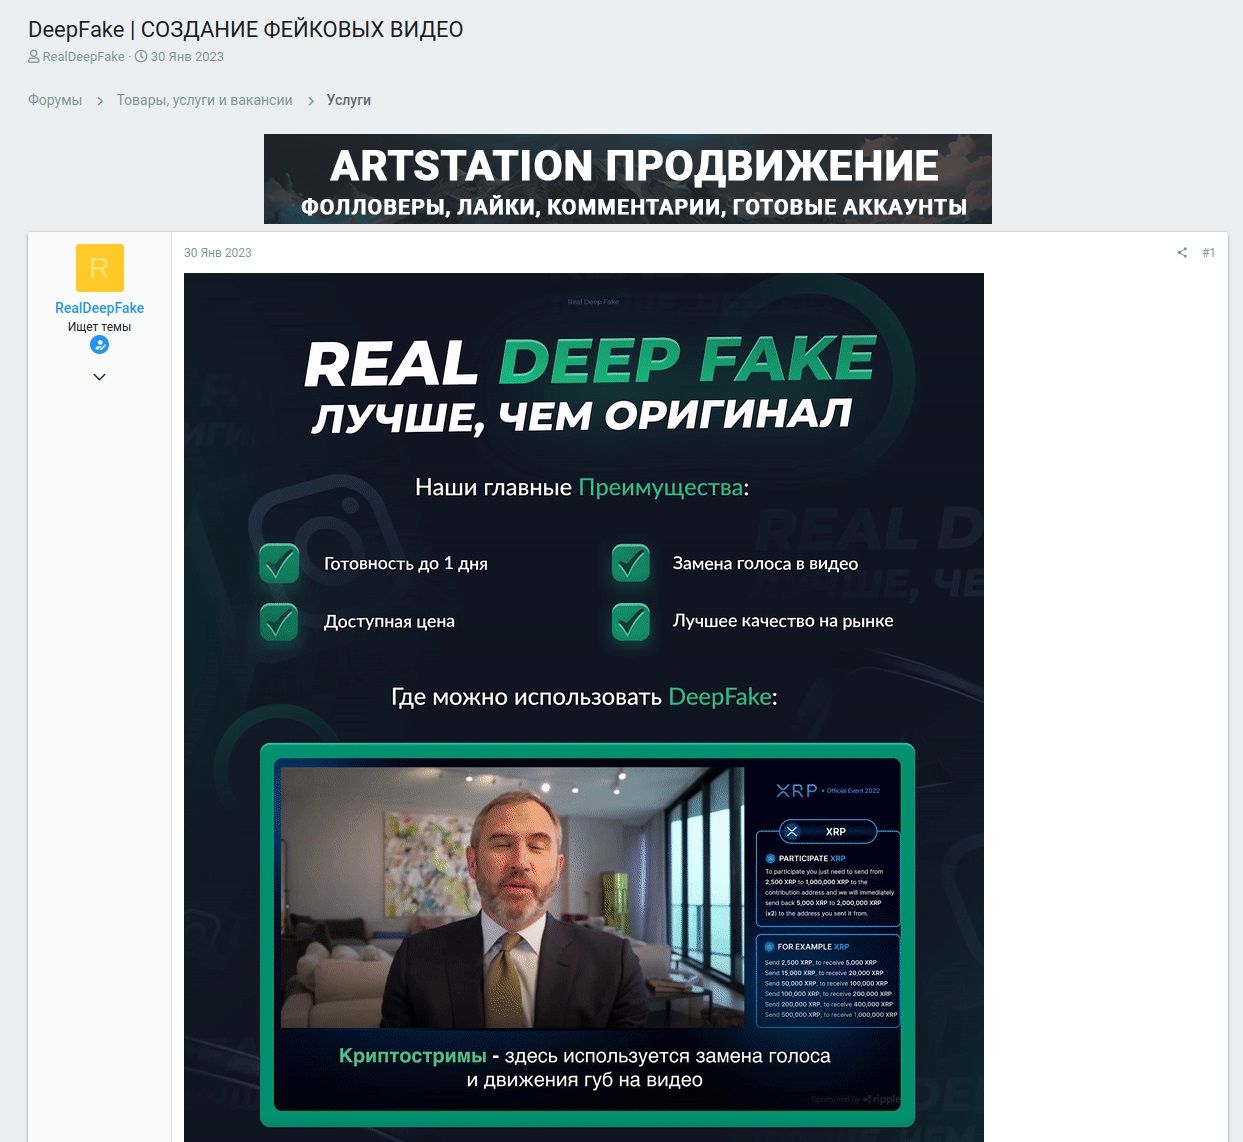 Darkweb offer: deepfake videos for cryptostreams.